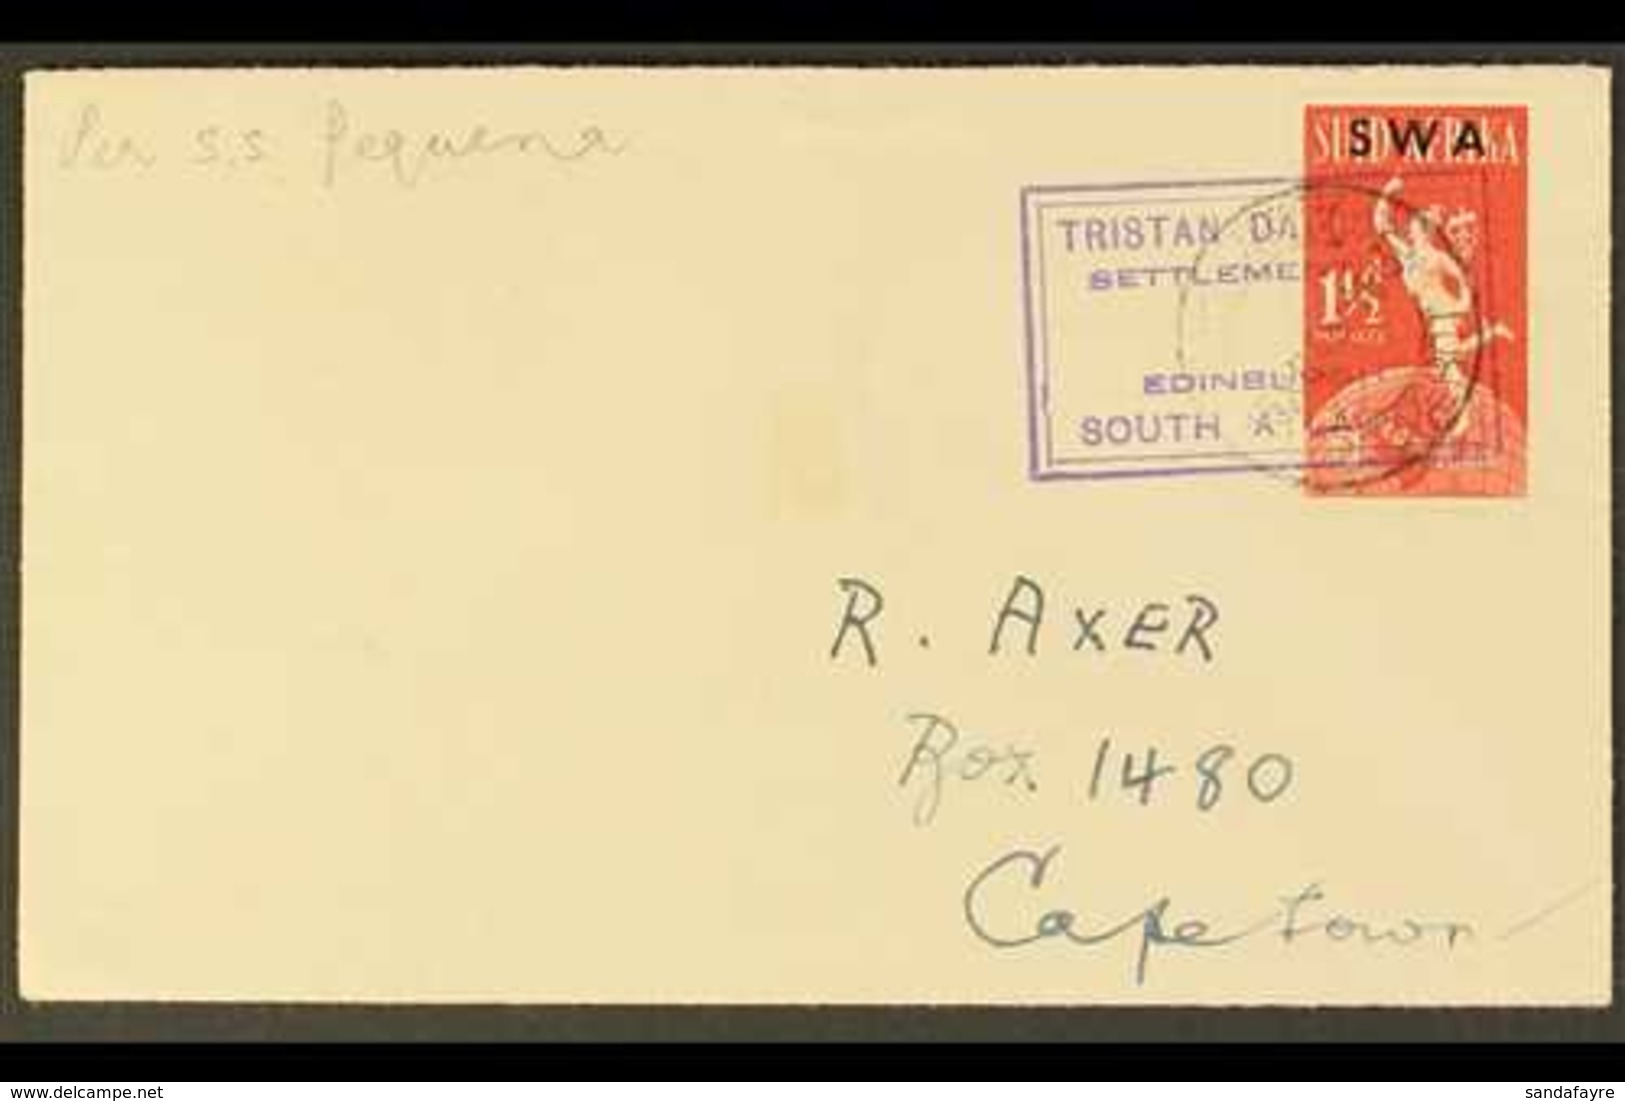 1949 (15 DEC) Hand Addressed Cover To Cape Town Bearing SWA 1½d Tied By "TRISTAN DA CUNHA / SETTLEMENT OF / EDINBURGH /  - Tristan Da Cunha